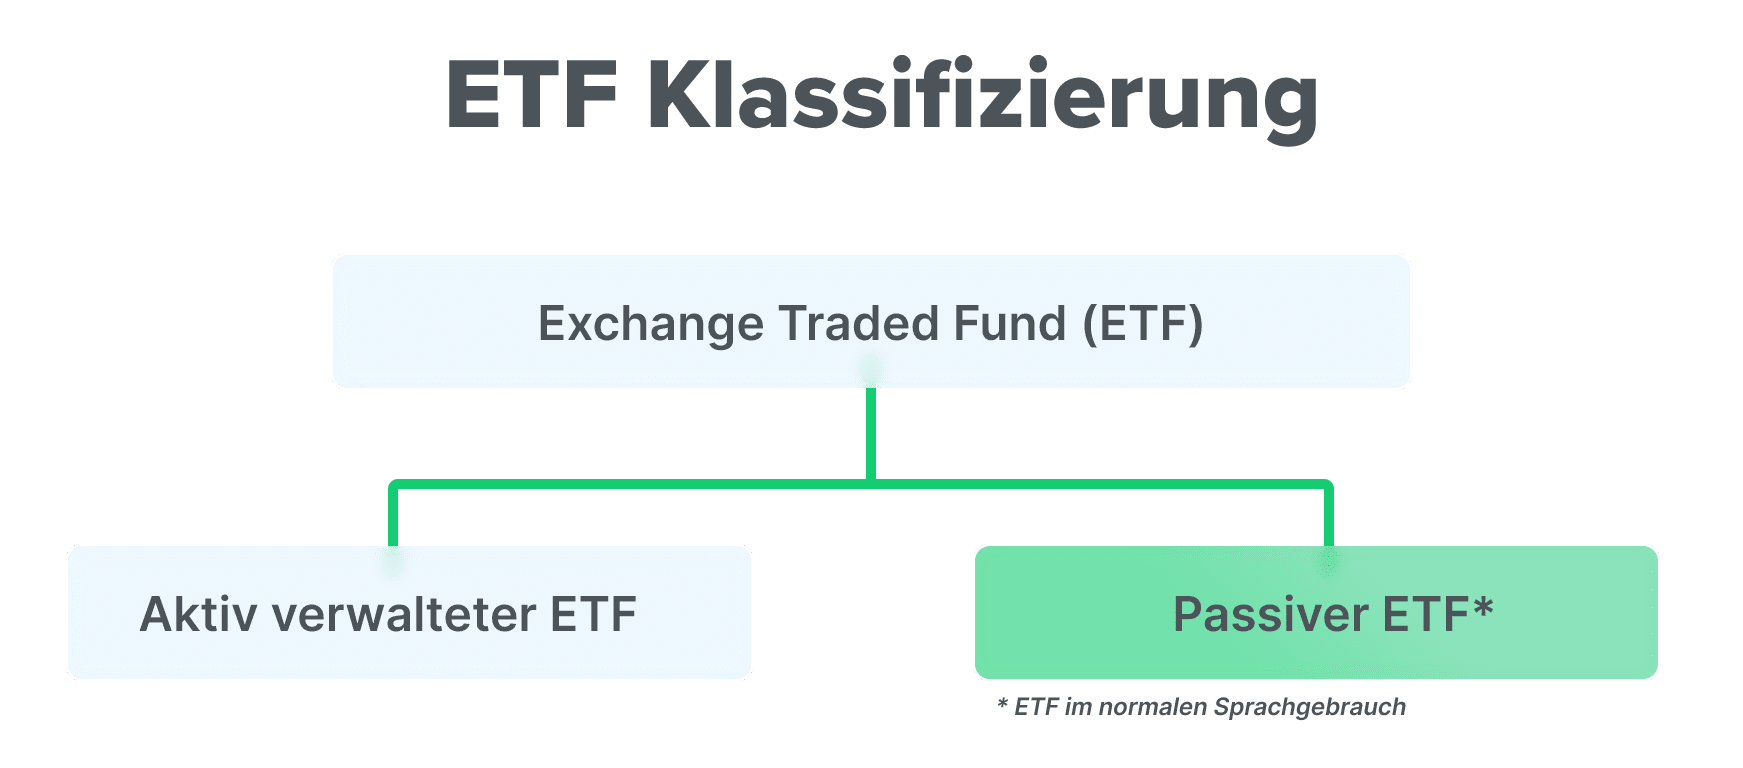 ETF Klassifizierung